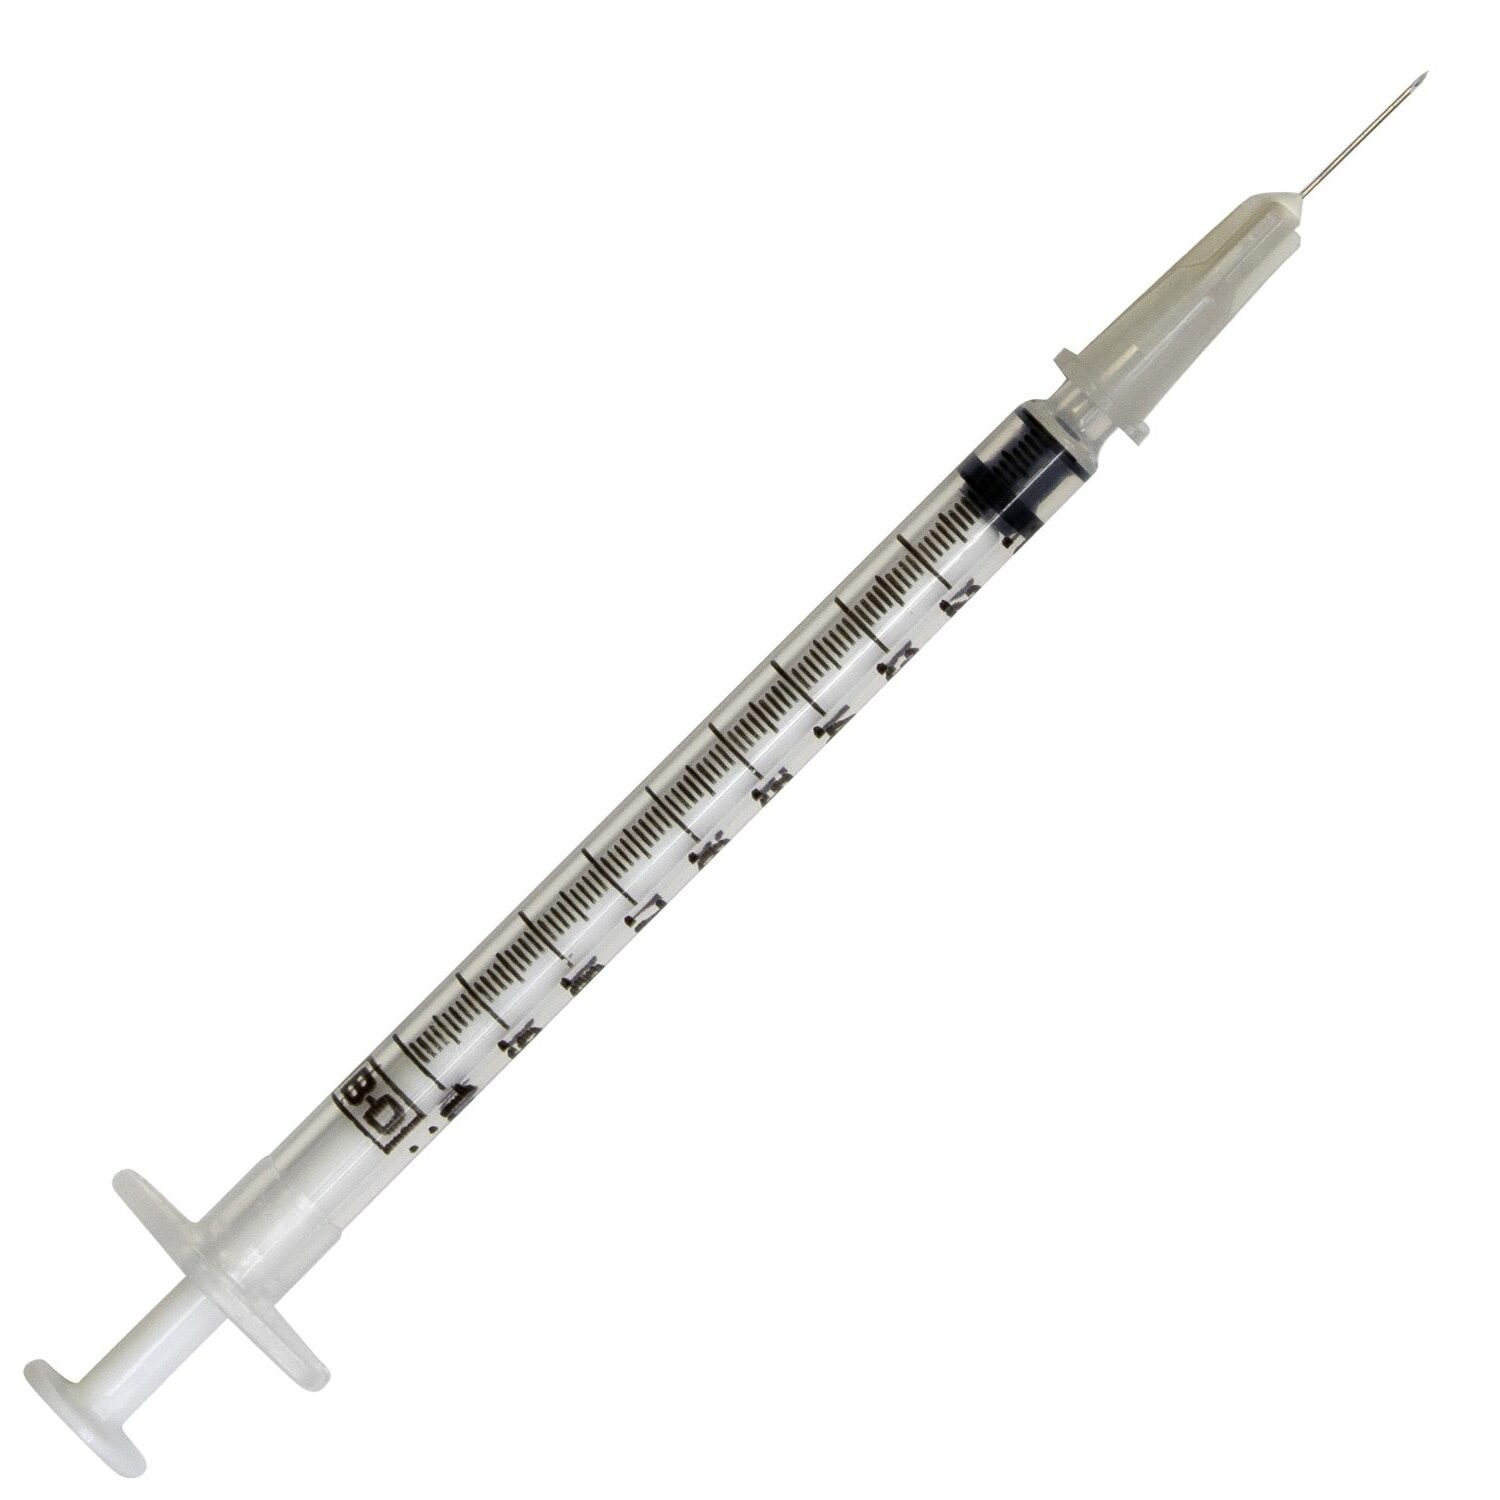 0.5ml Insulin Syringe & Needle 30G X 8mm (30G X 5/16 Inch) from